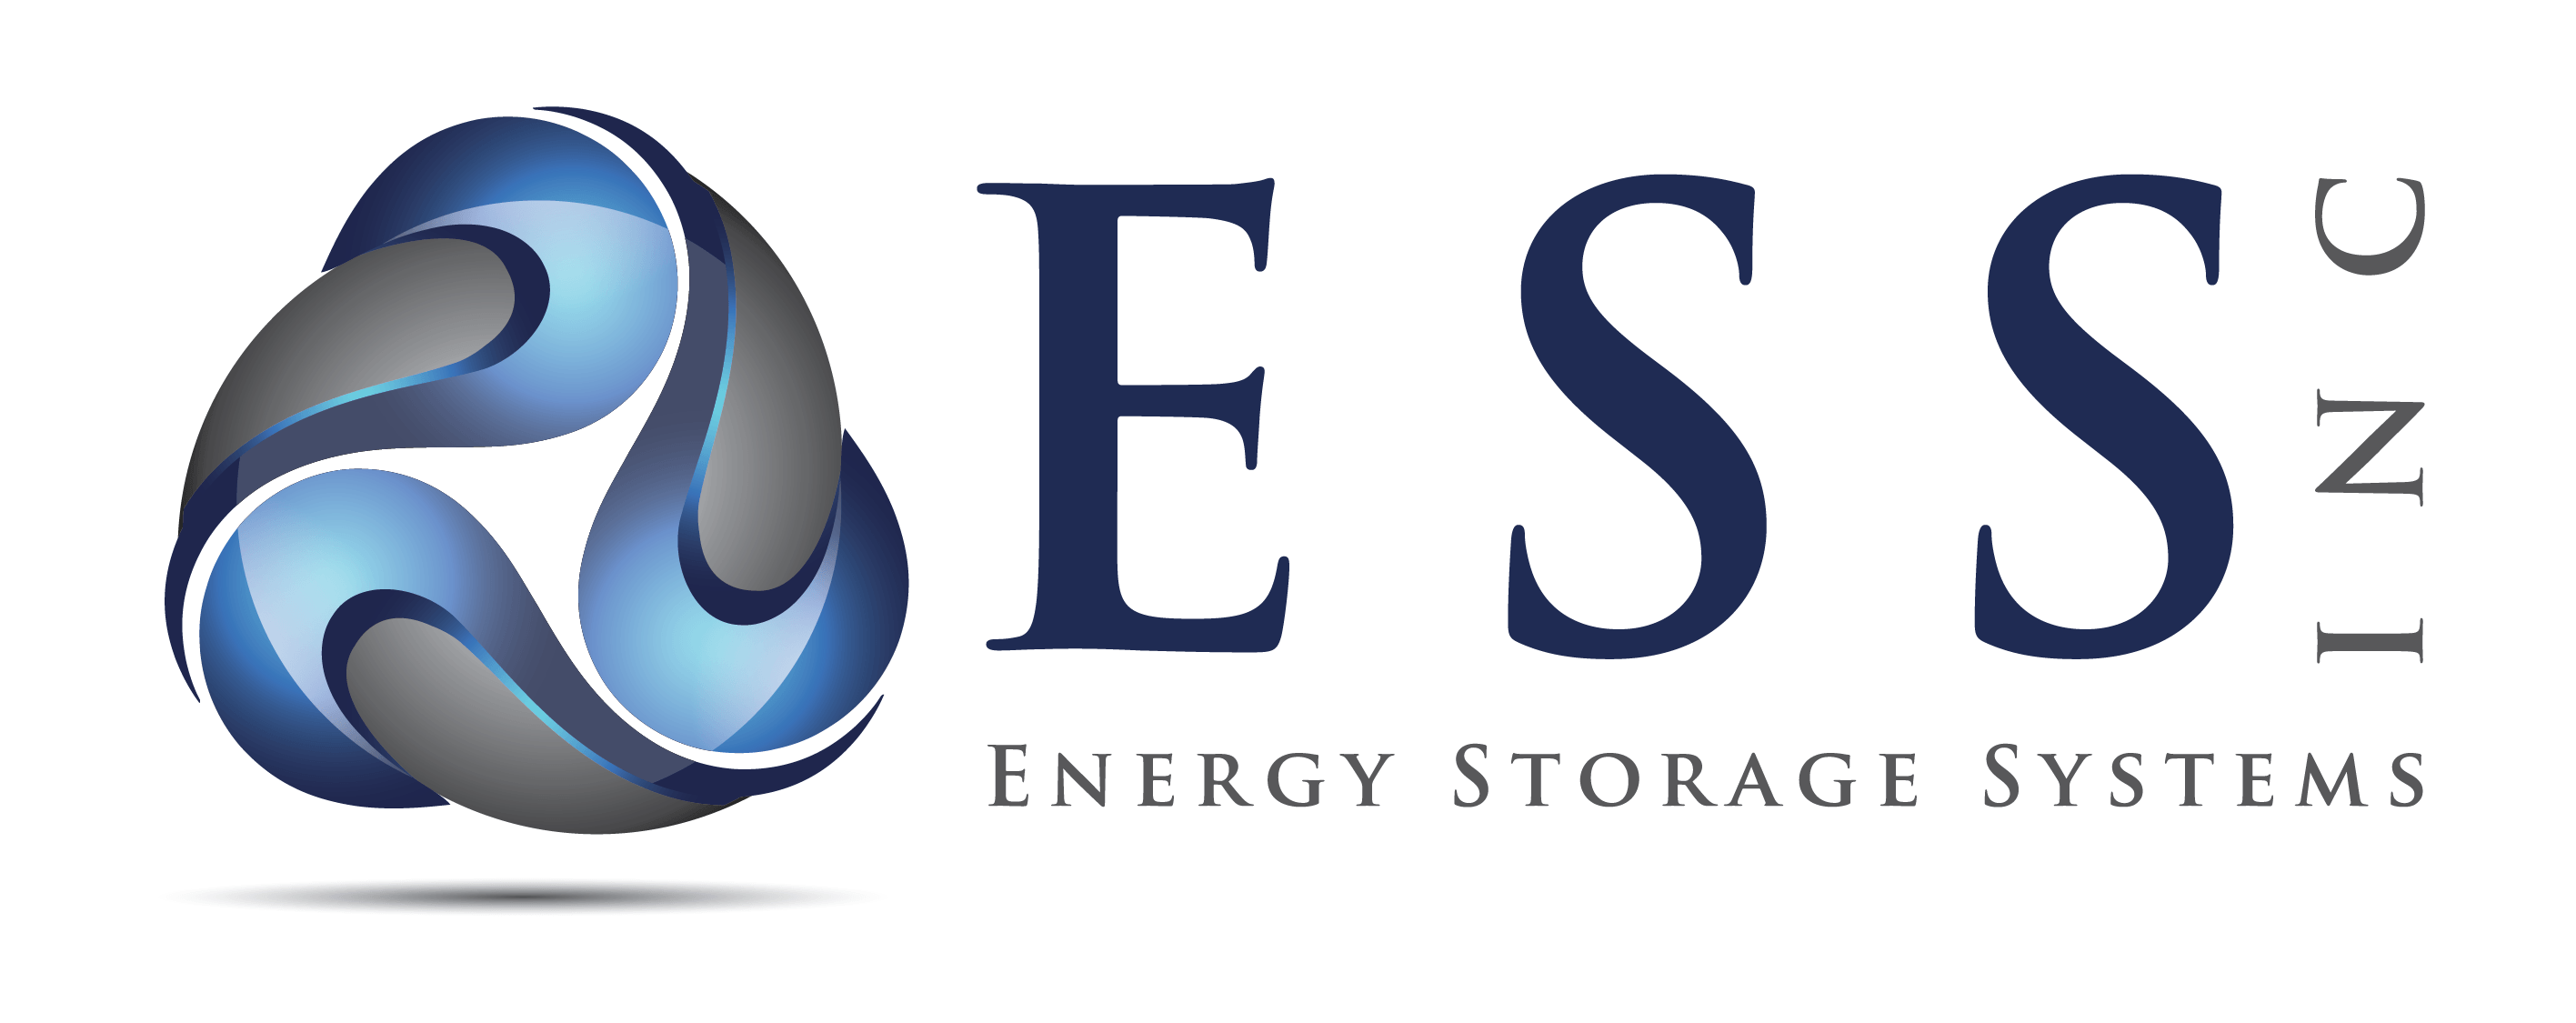 ESS Logo - Energy Storage Systems, Long Duration Storage